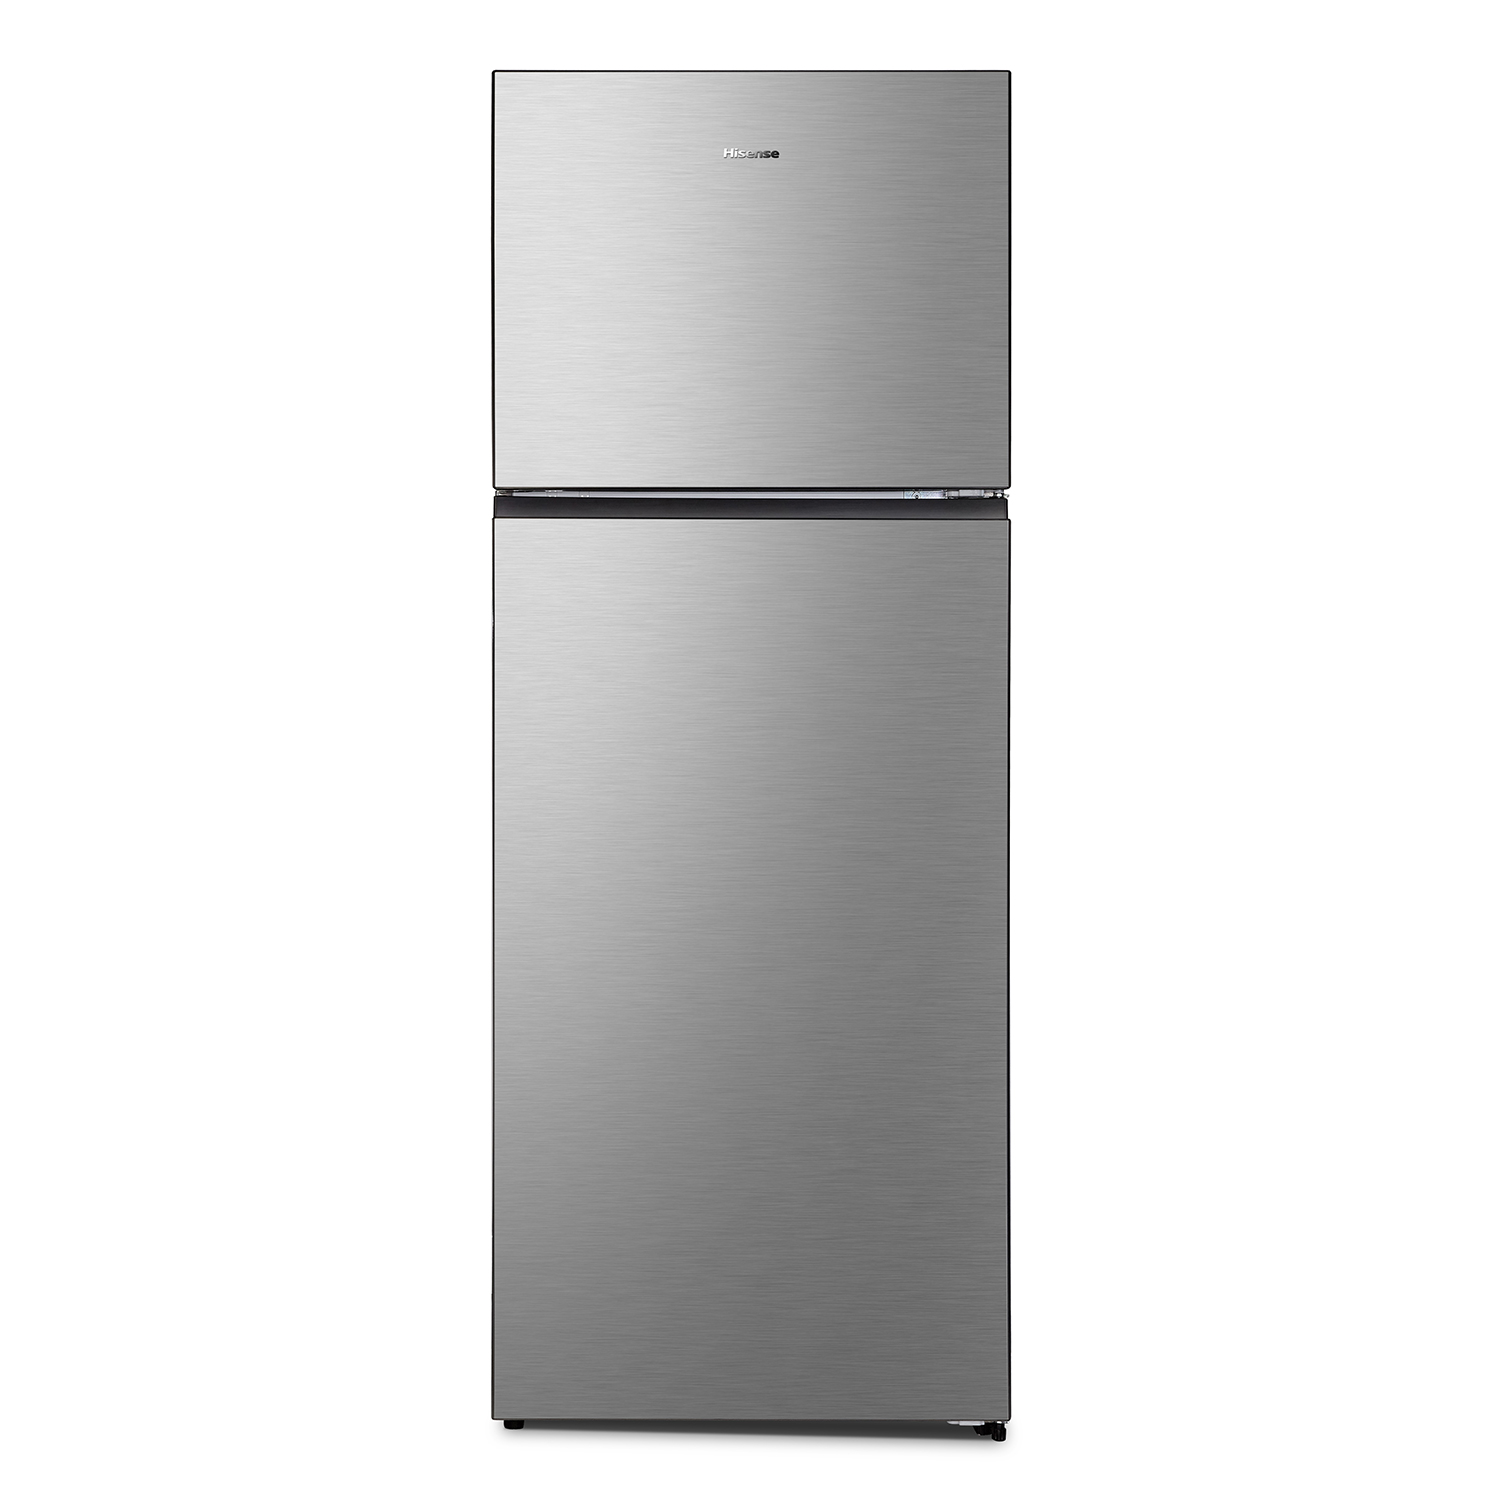 Купить холодильник дэу. Холодильник даево двухкамерный fr264. Холодильник Дэу двухкамерный fr 661. Daewoo холодильник двухкамерный серебристый. Daewoo Electronics холодильник двухкамерный.